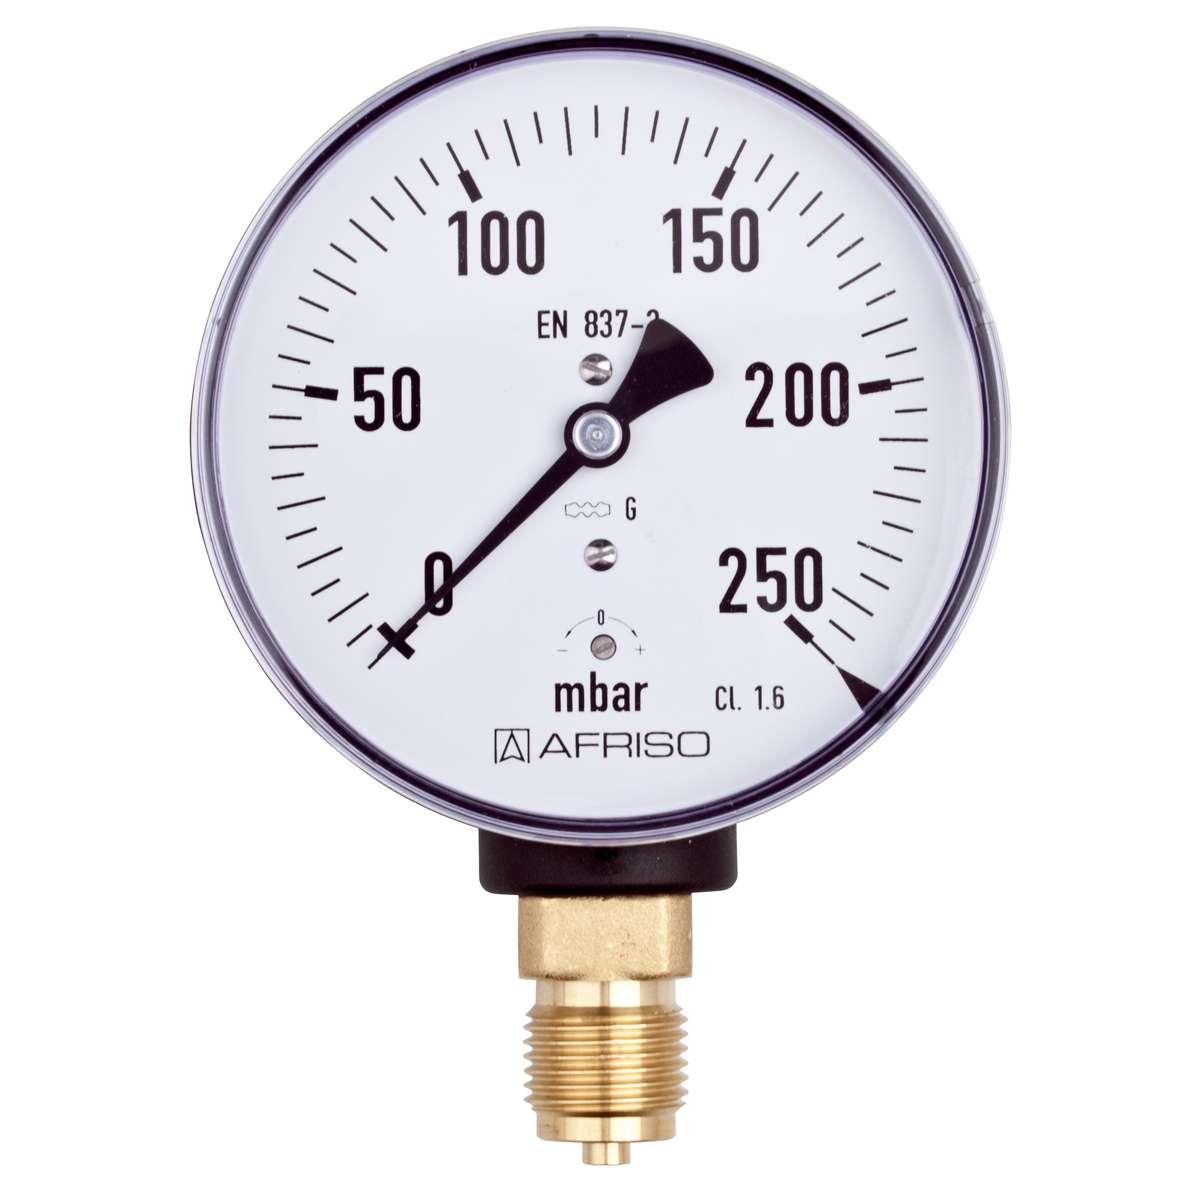 Manometr KP 100 pro plynná média, Ø 100 mm, 0 ÷ 400 mbar, G½", radiální, typ D2 - AFRISO.CZ